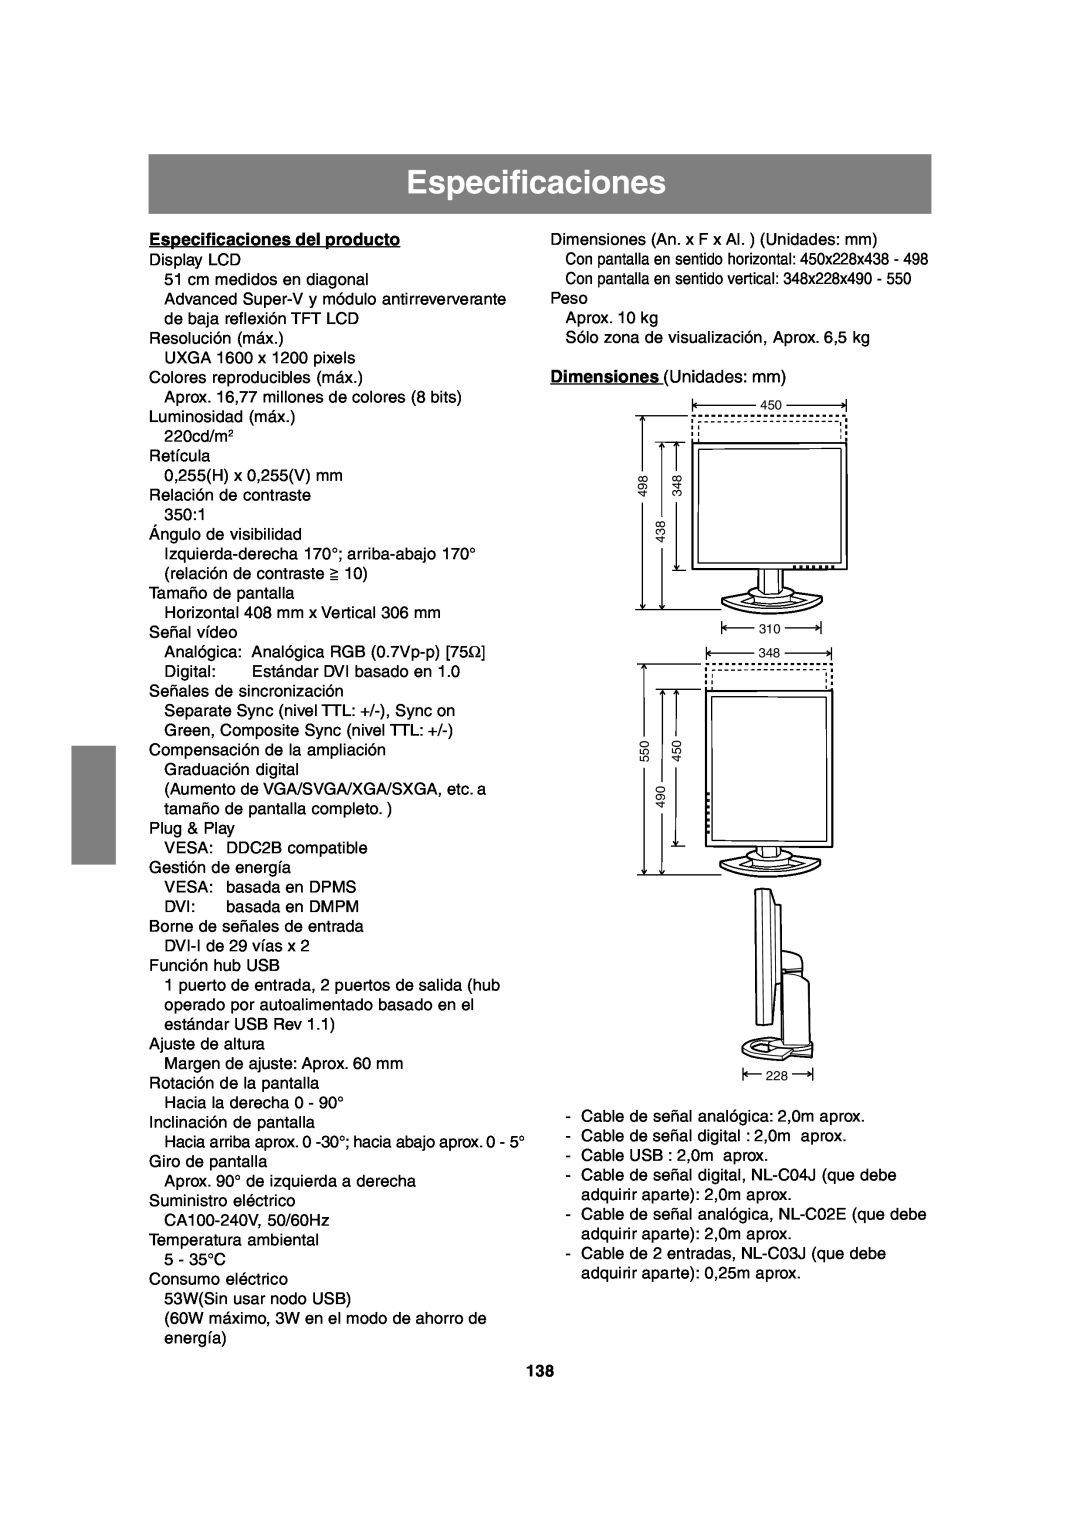 Sharp LL-T2020 operation manual Especificaciones del producto, Dimensiones Unidades mm 